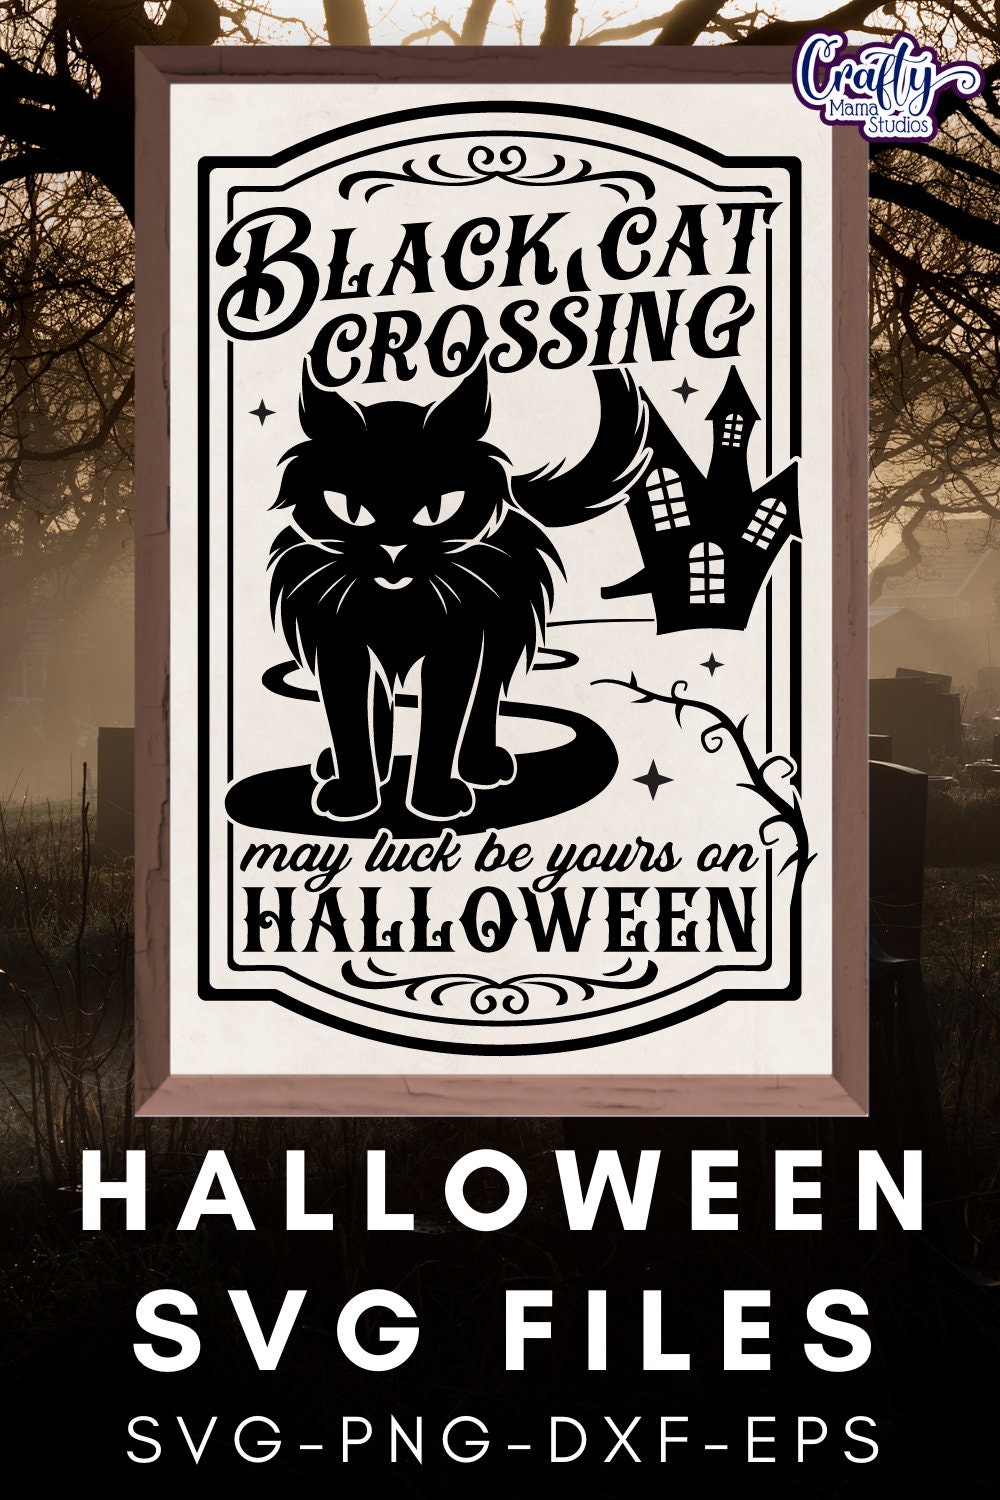 Black Cat Svg Files Halloween Svg Files Black Cat Crossing